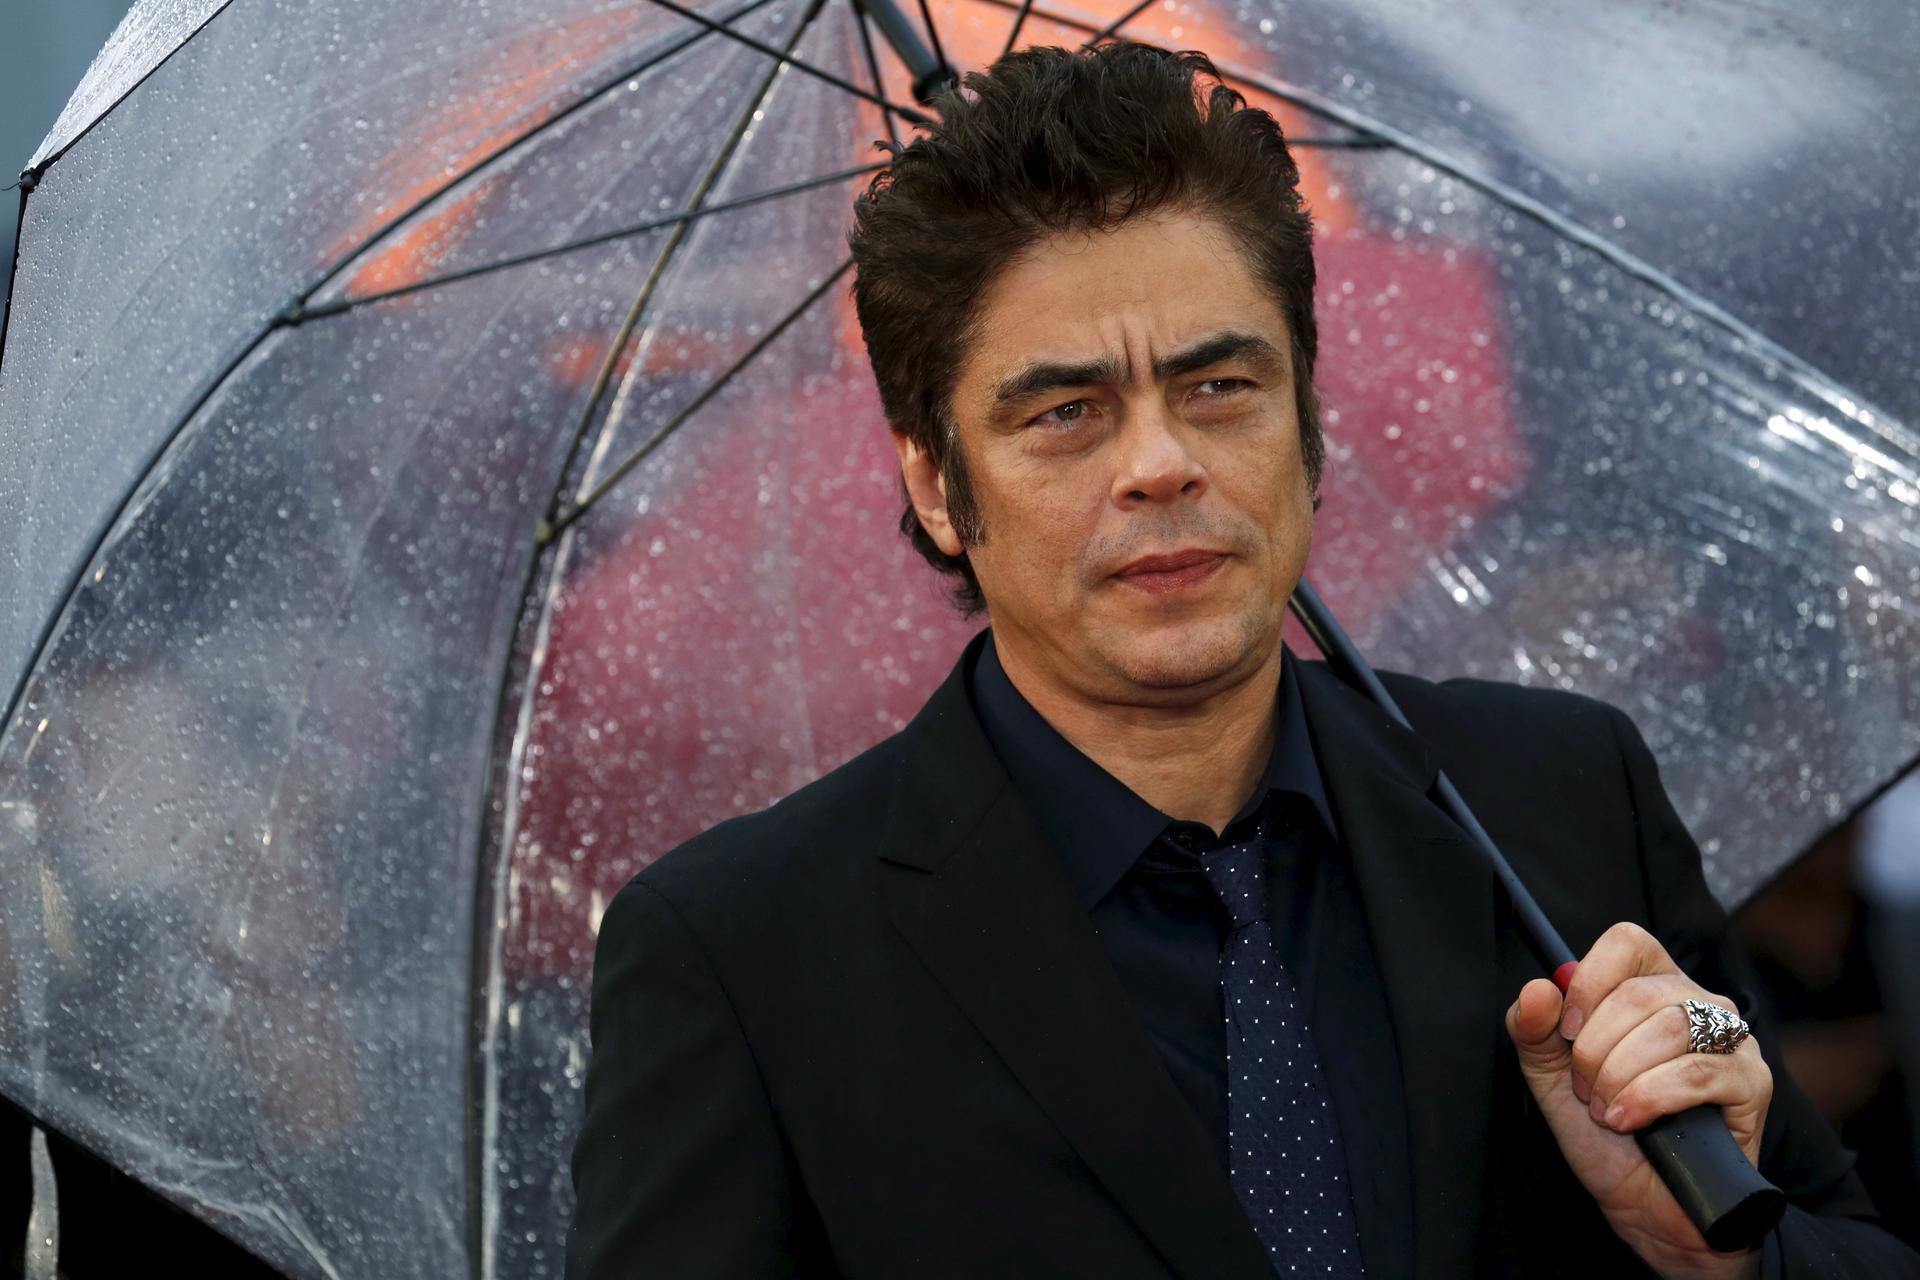 Actor Benicio Del Toro arrives for the UK premiere of "Sicario" at Leicester Square in London